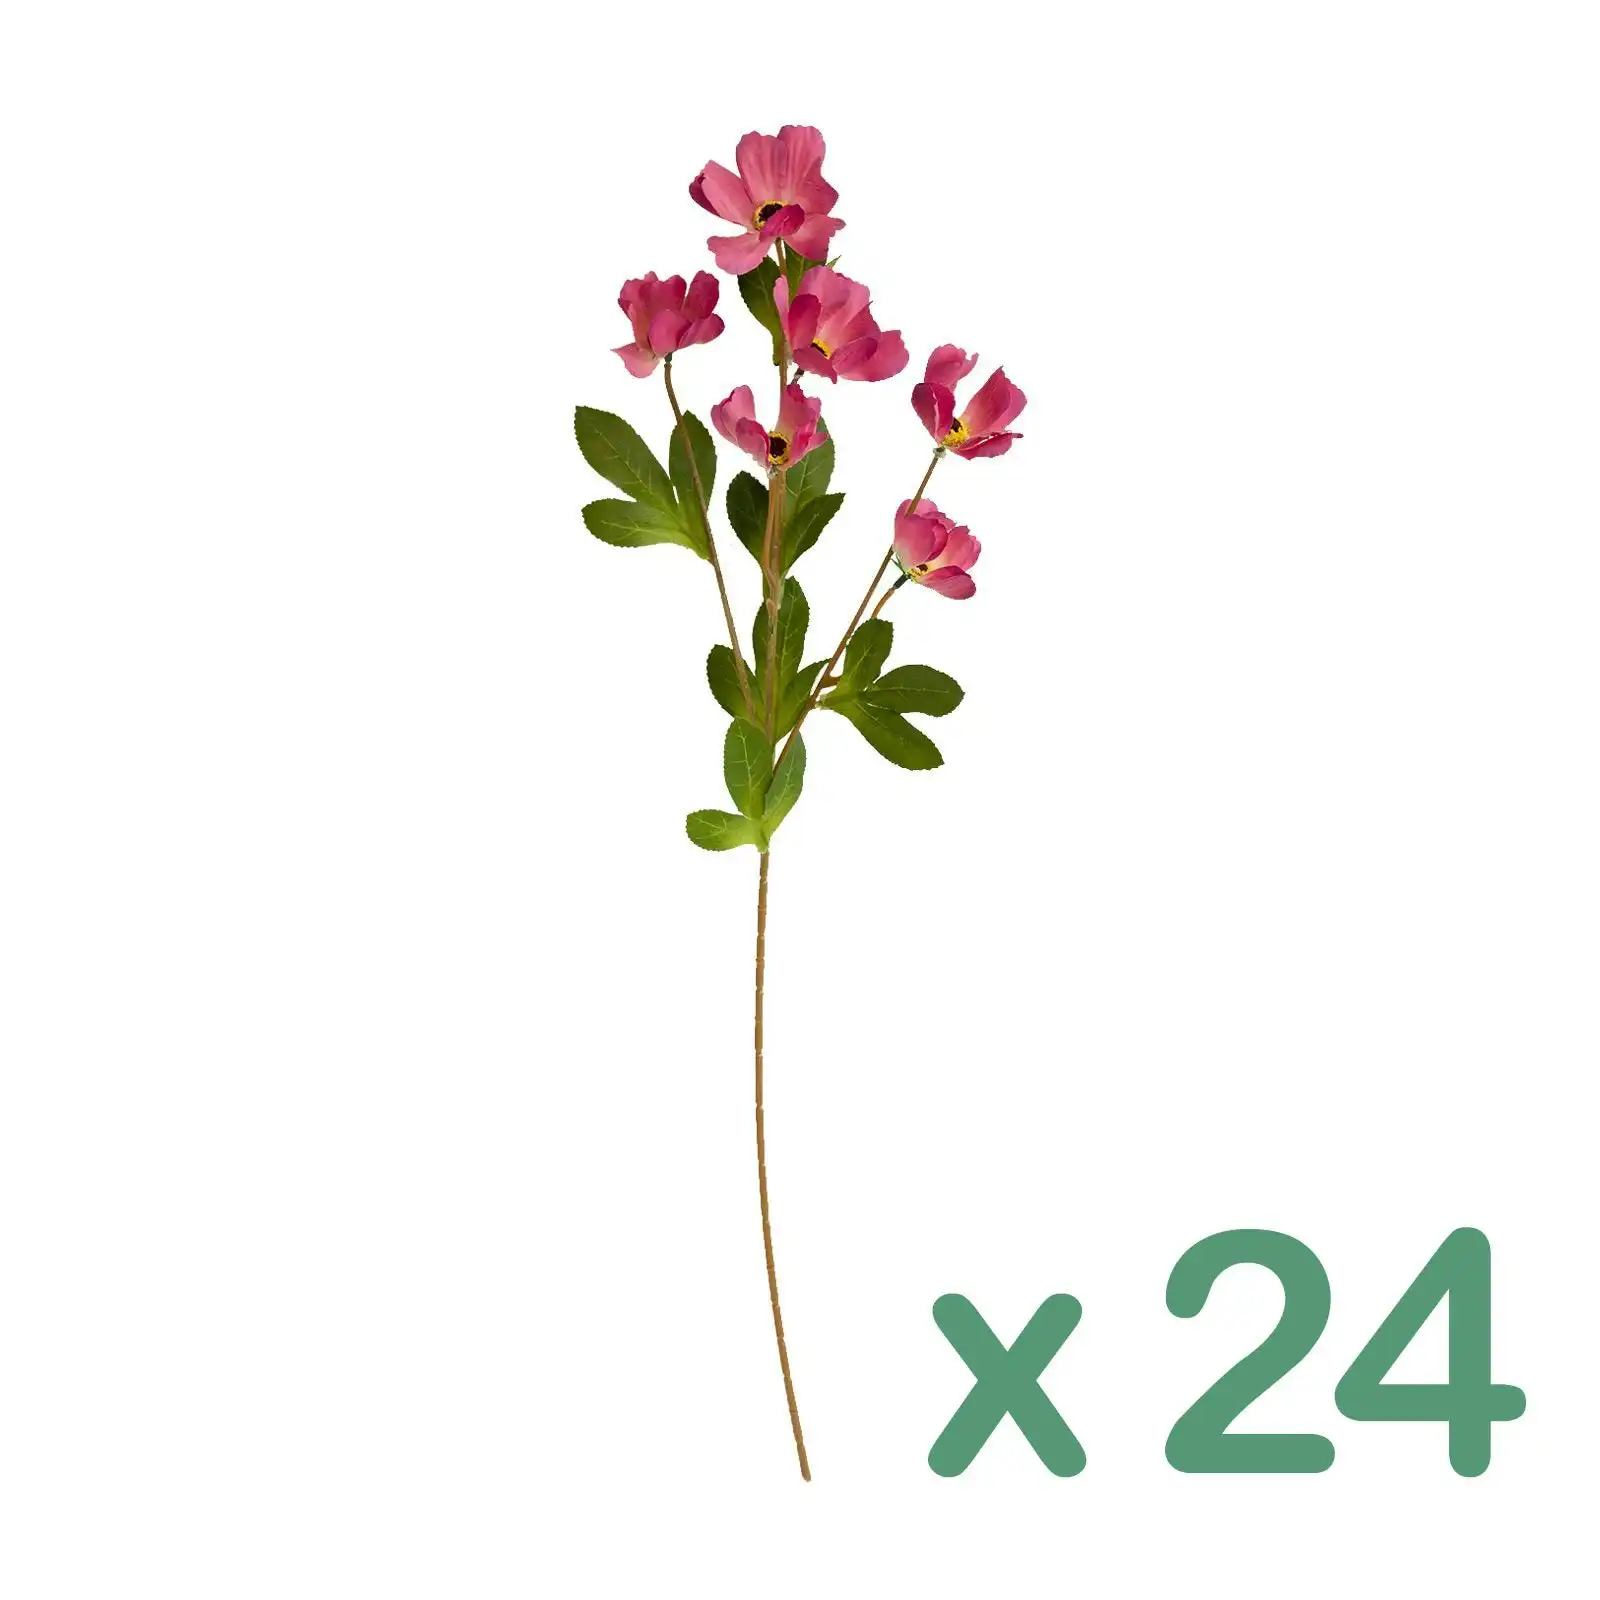 Carton of 24 - Artificial Flowers - Wild Poppy Pink 60cm